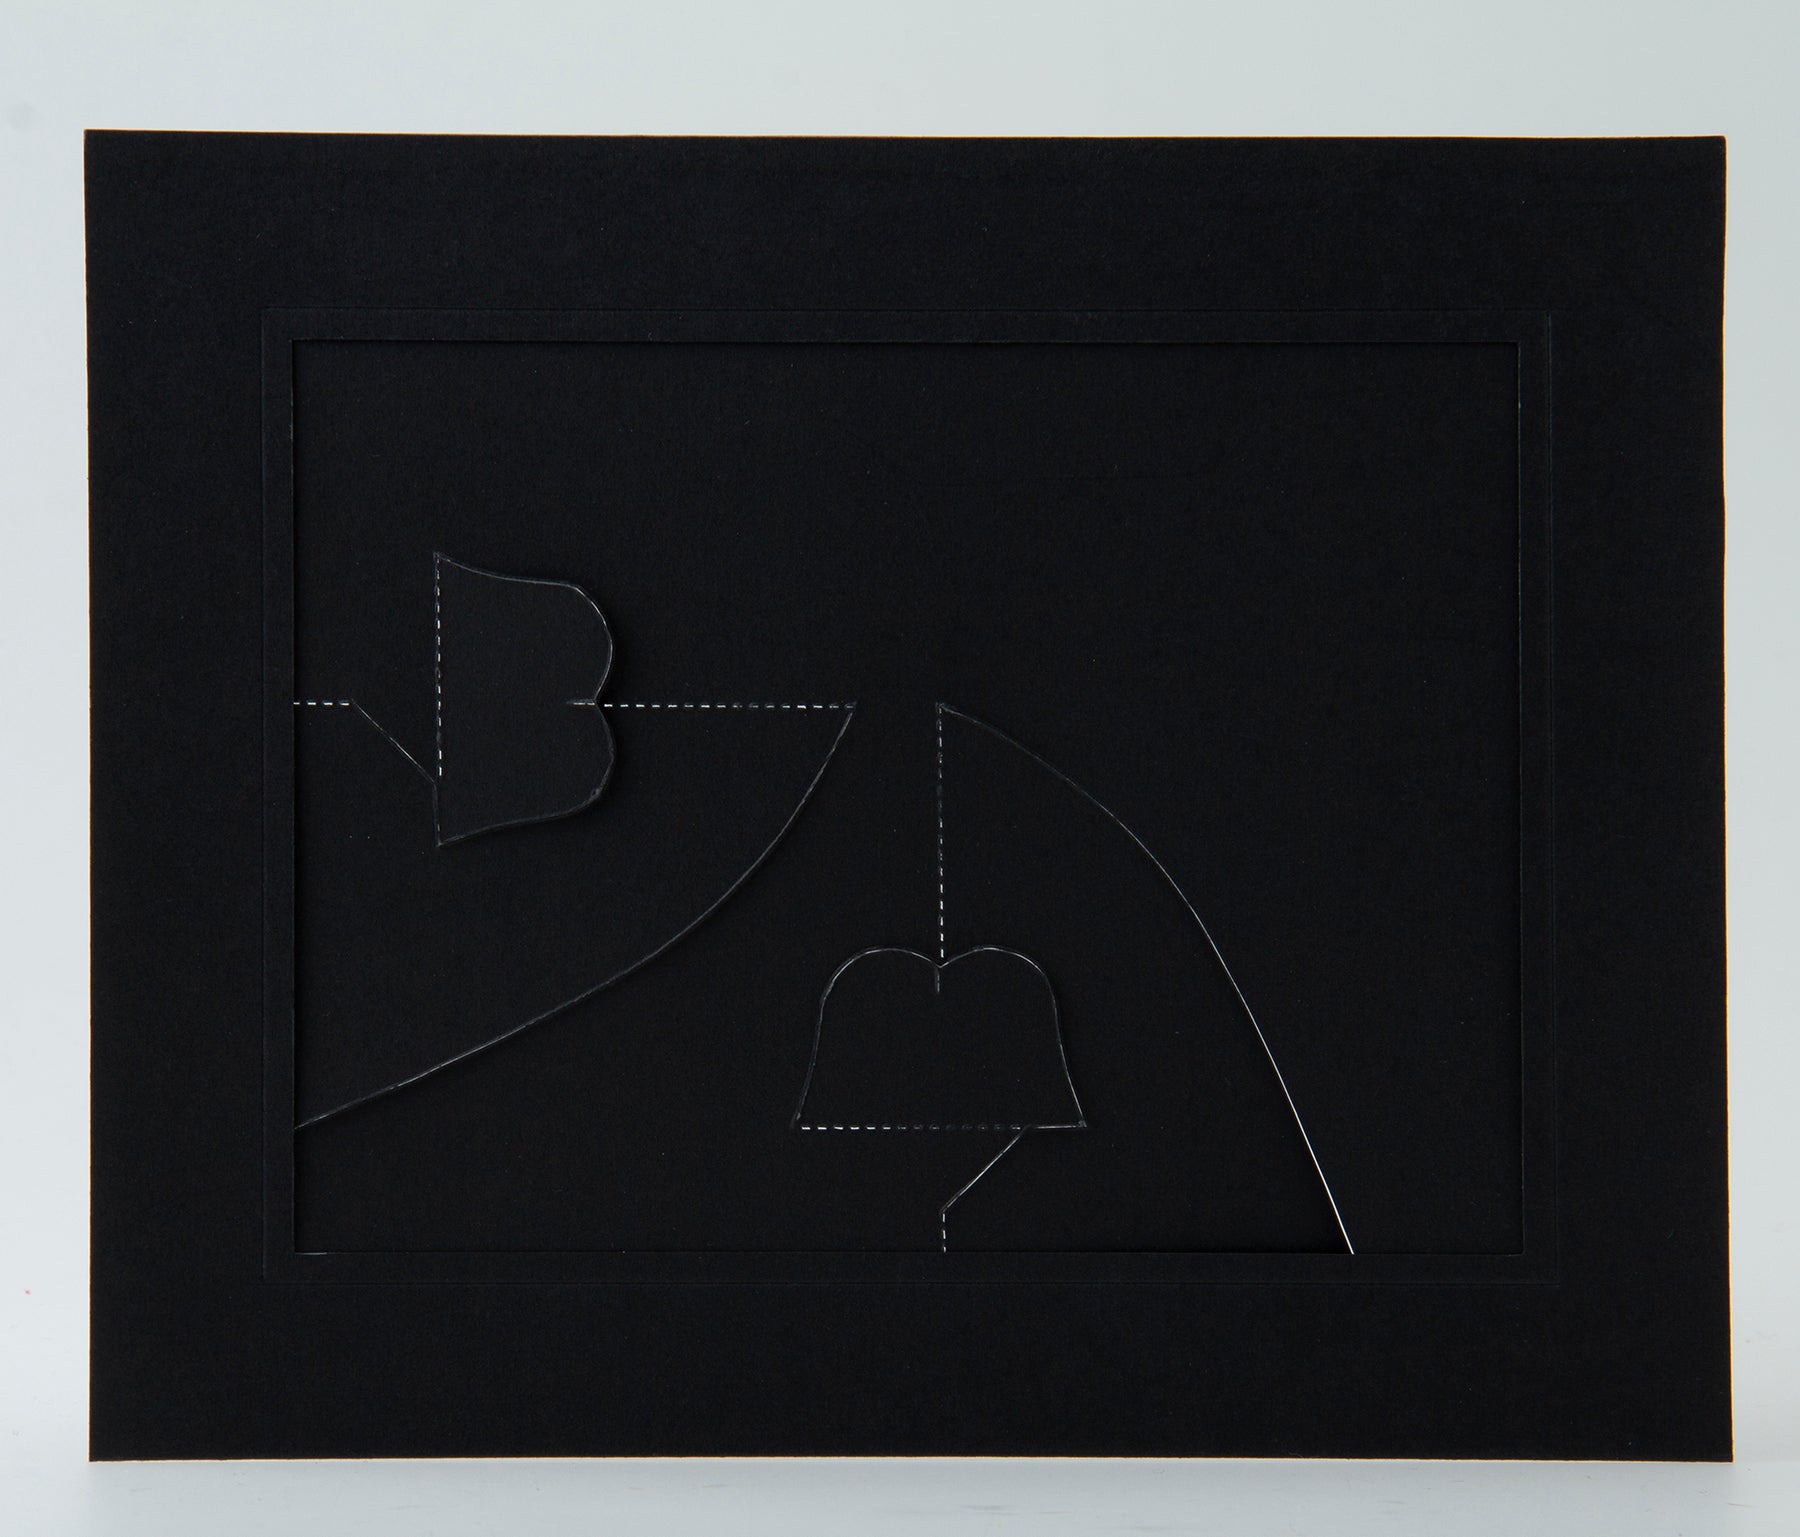 Black 8" x 6" Cardboard Easel Frame